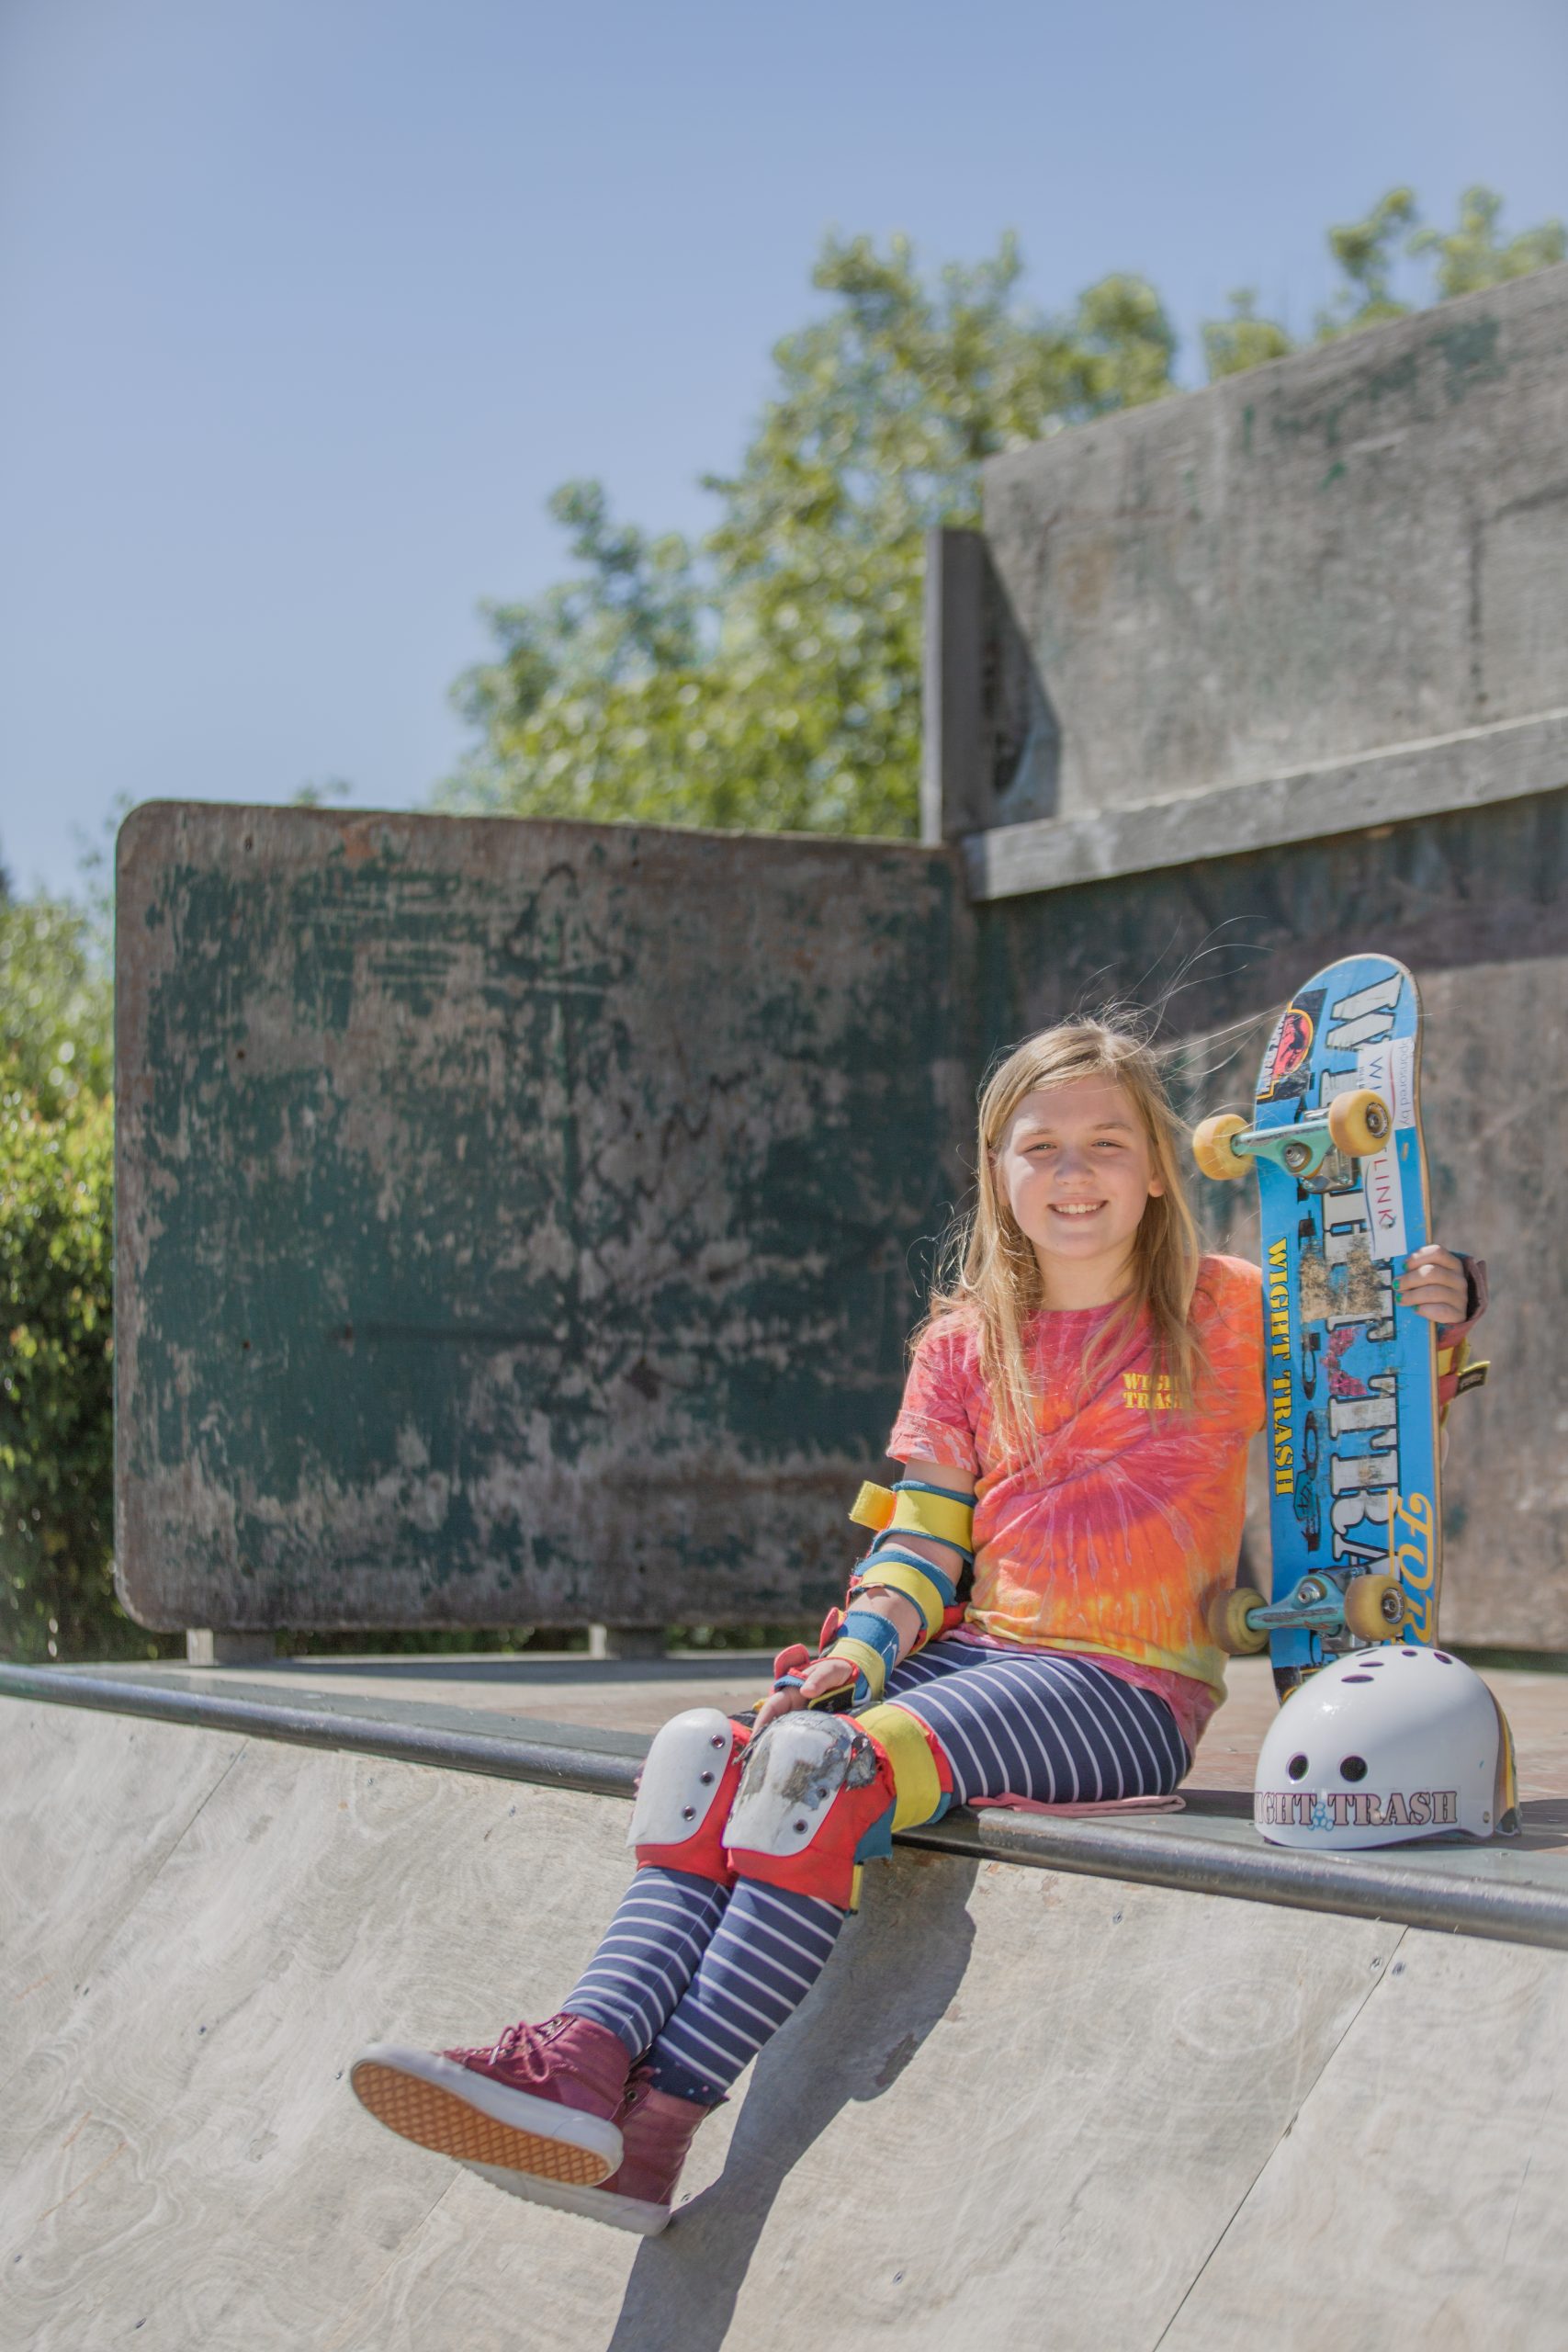 Skateboarder Martha Eggleton with her skateboard and helmet at an Isle of Wight skate park